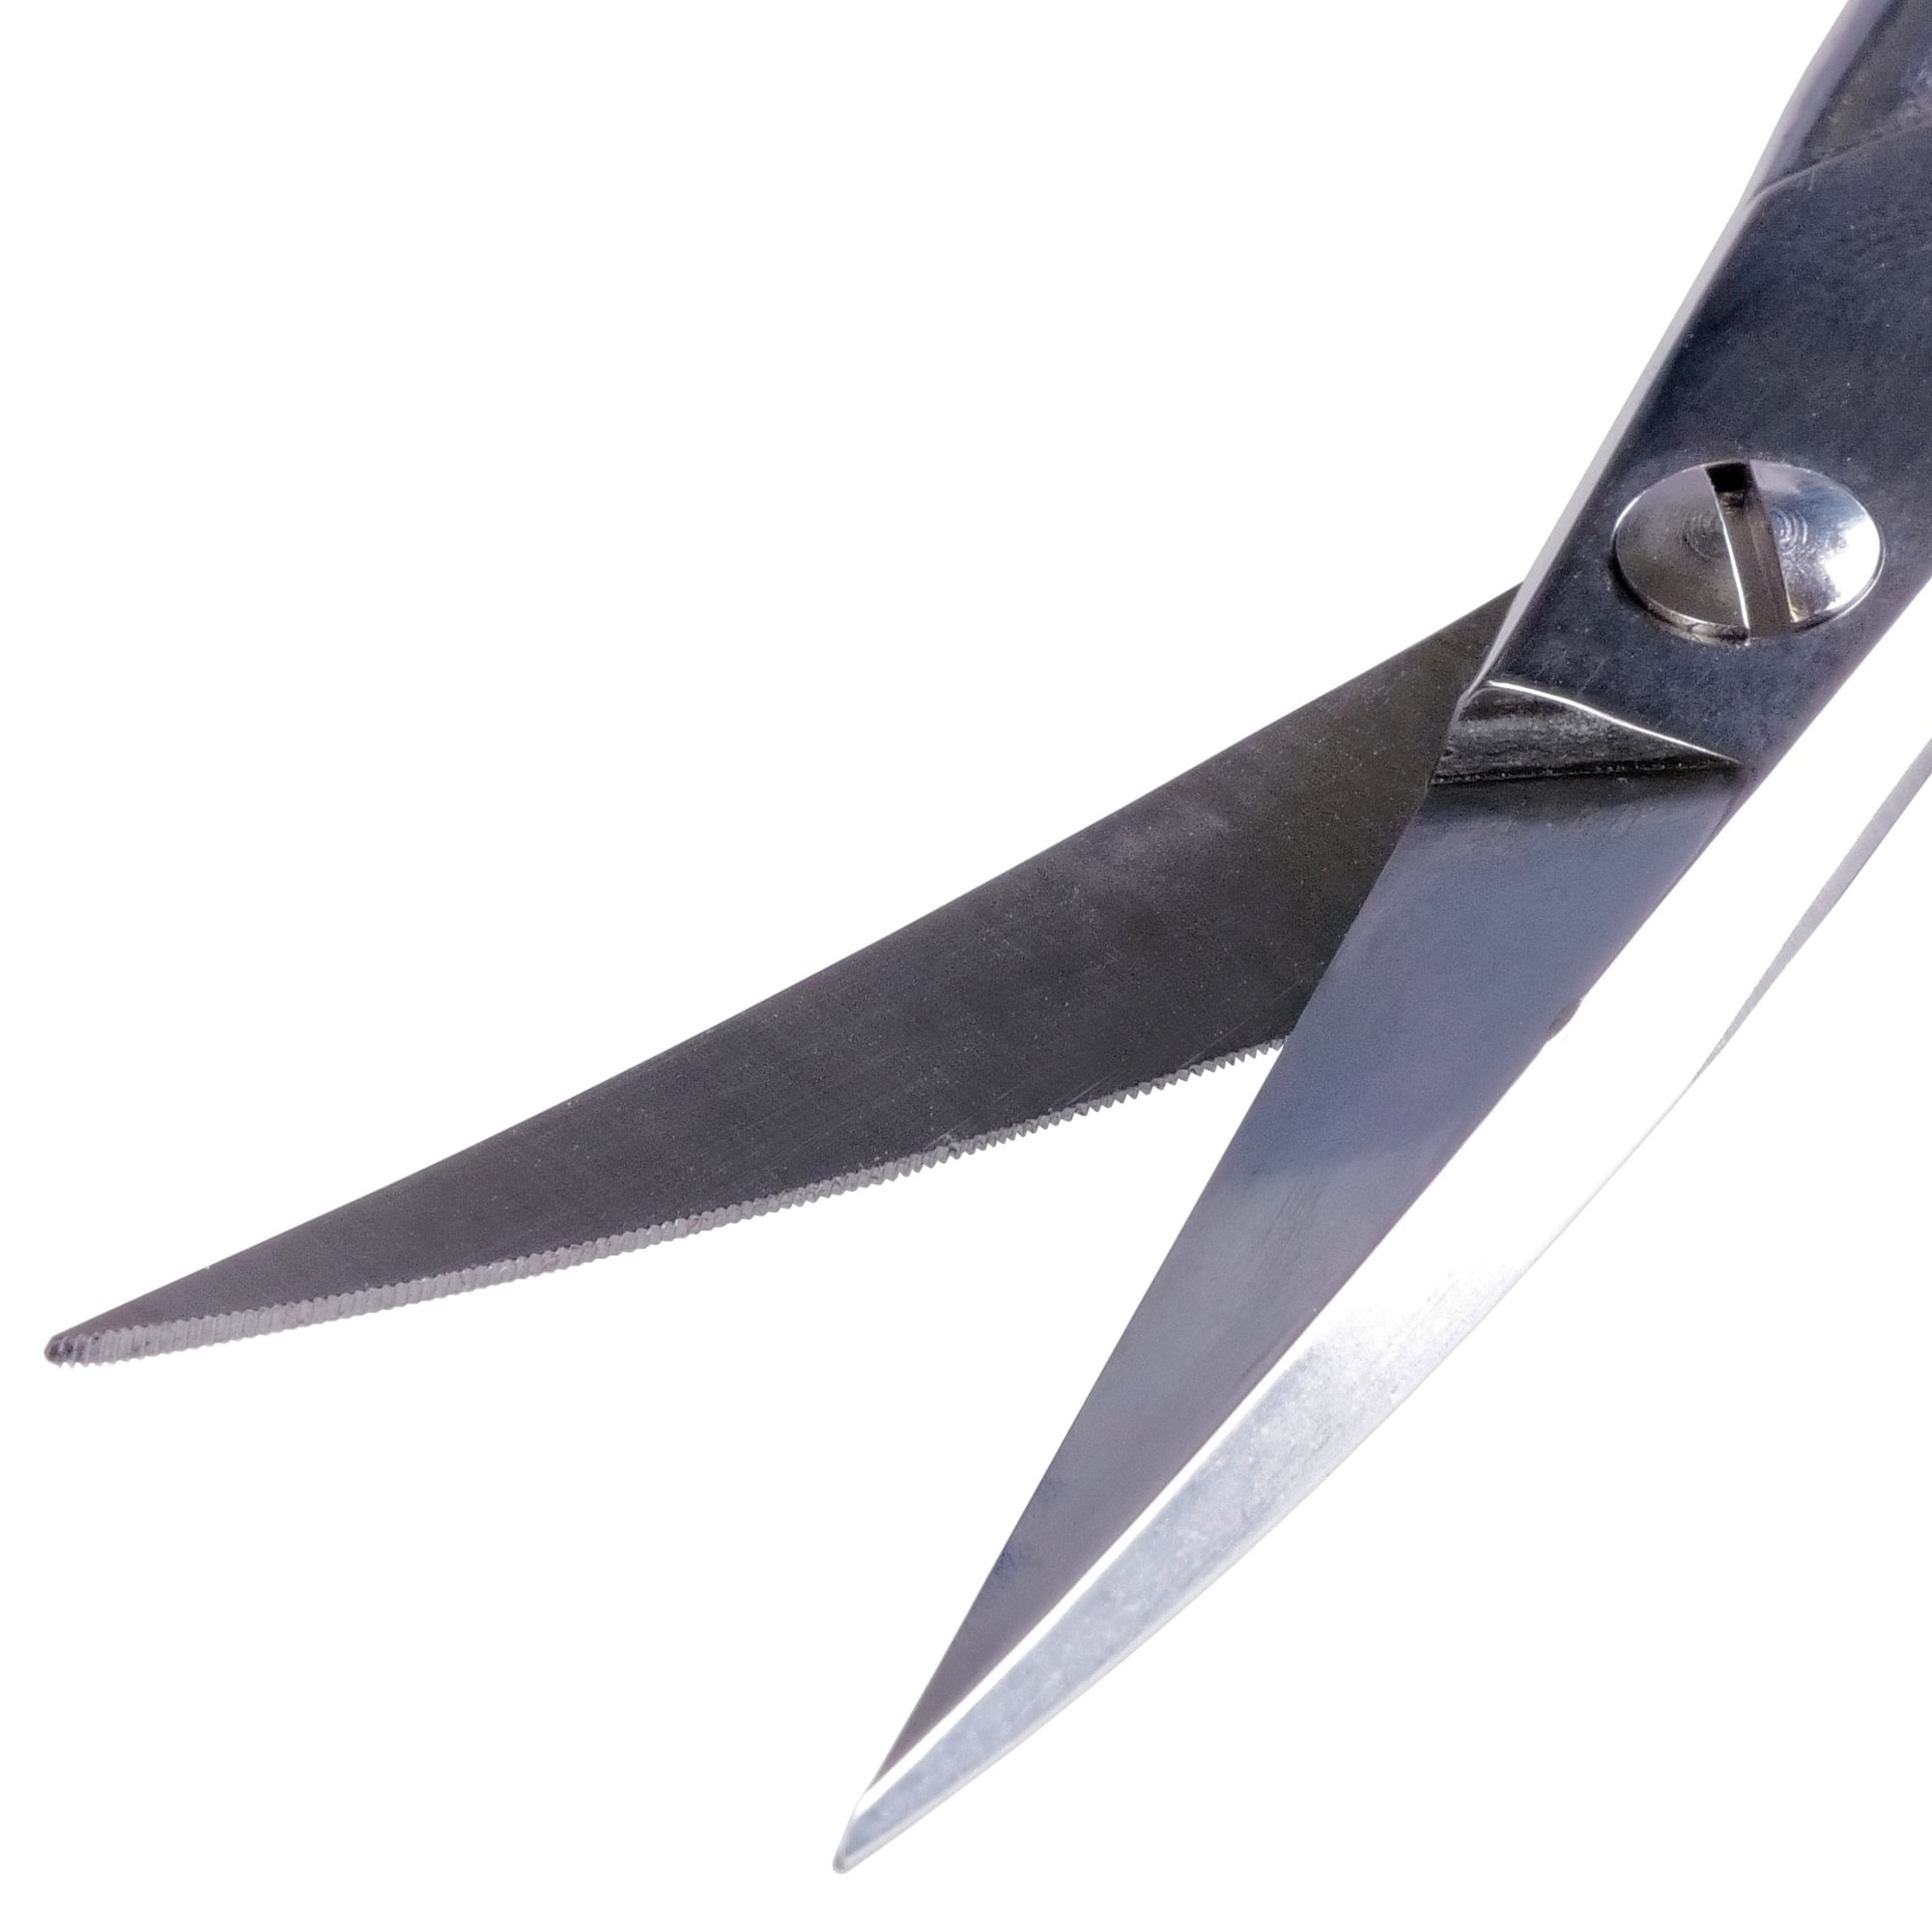 Fabric scissors curved (offset handles), 17.5 cm / 7" length, image 3